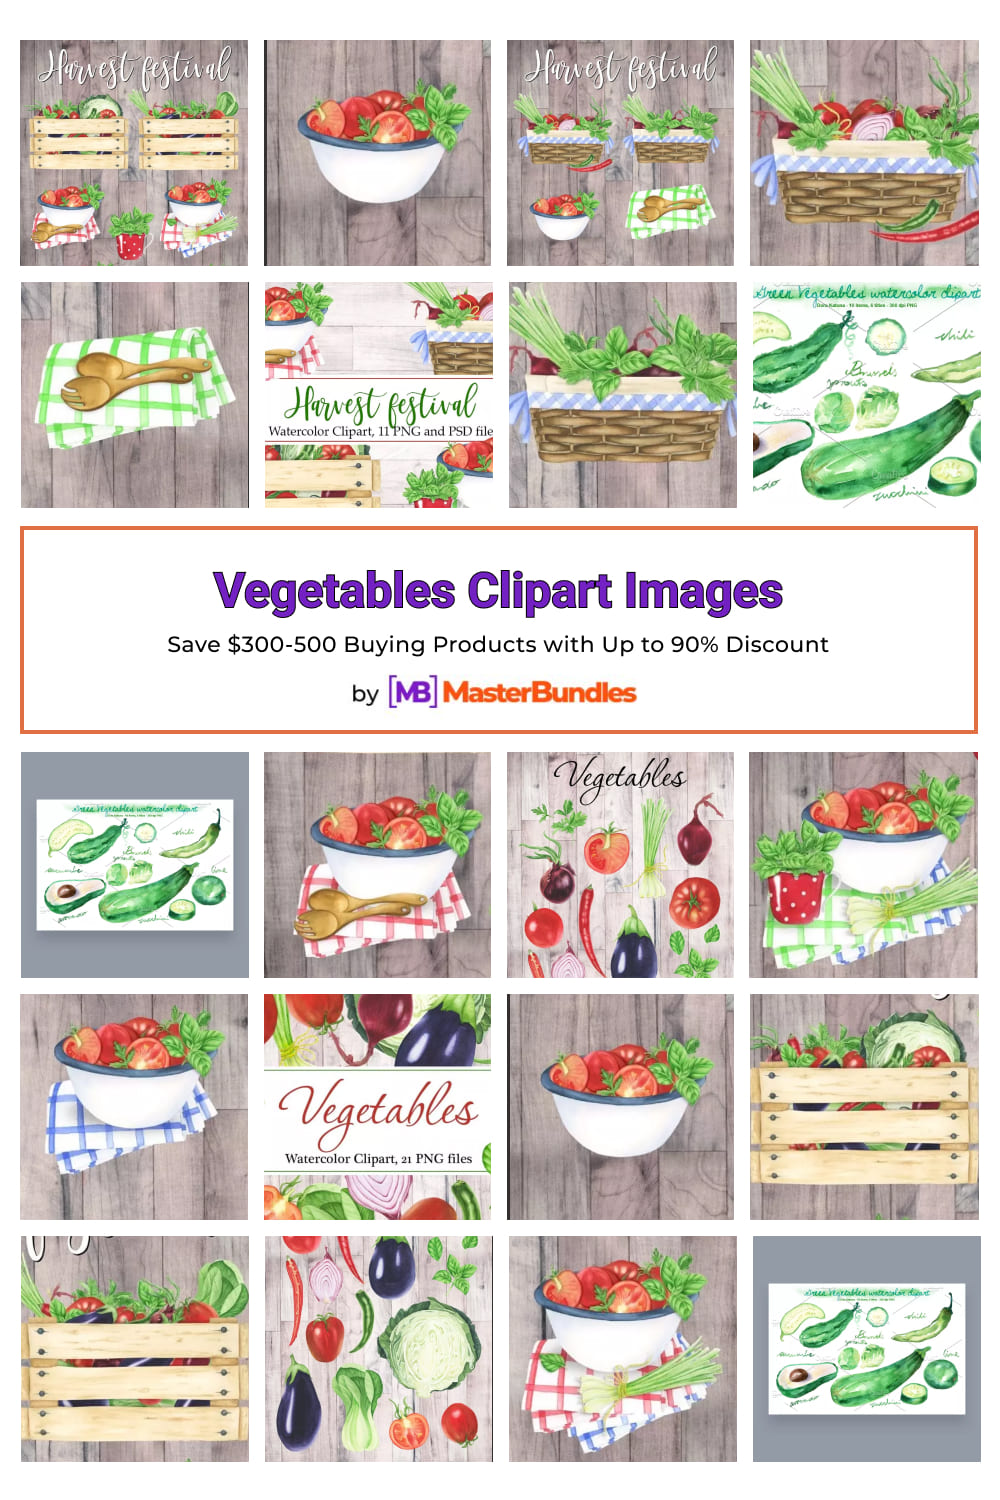 Vegetables Clipart Images Pinterest image.